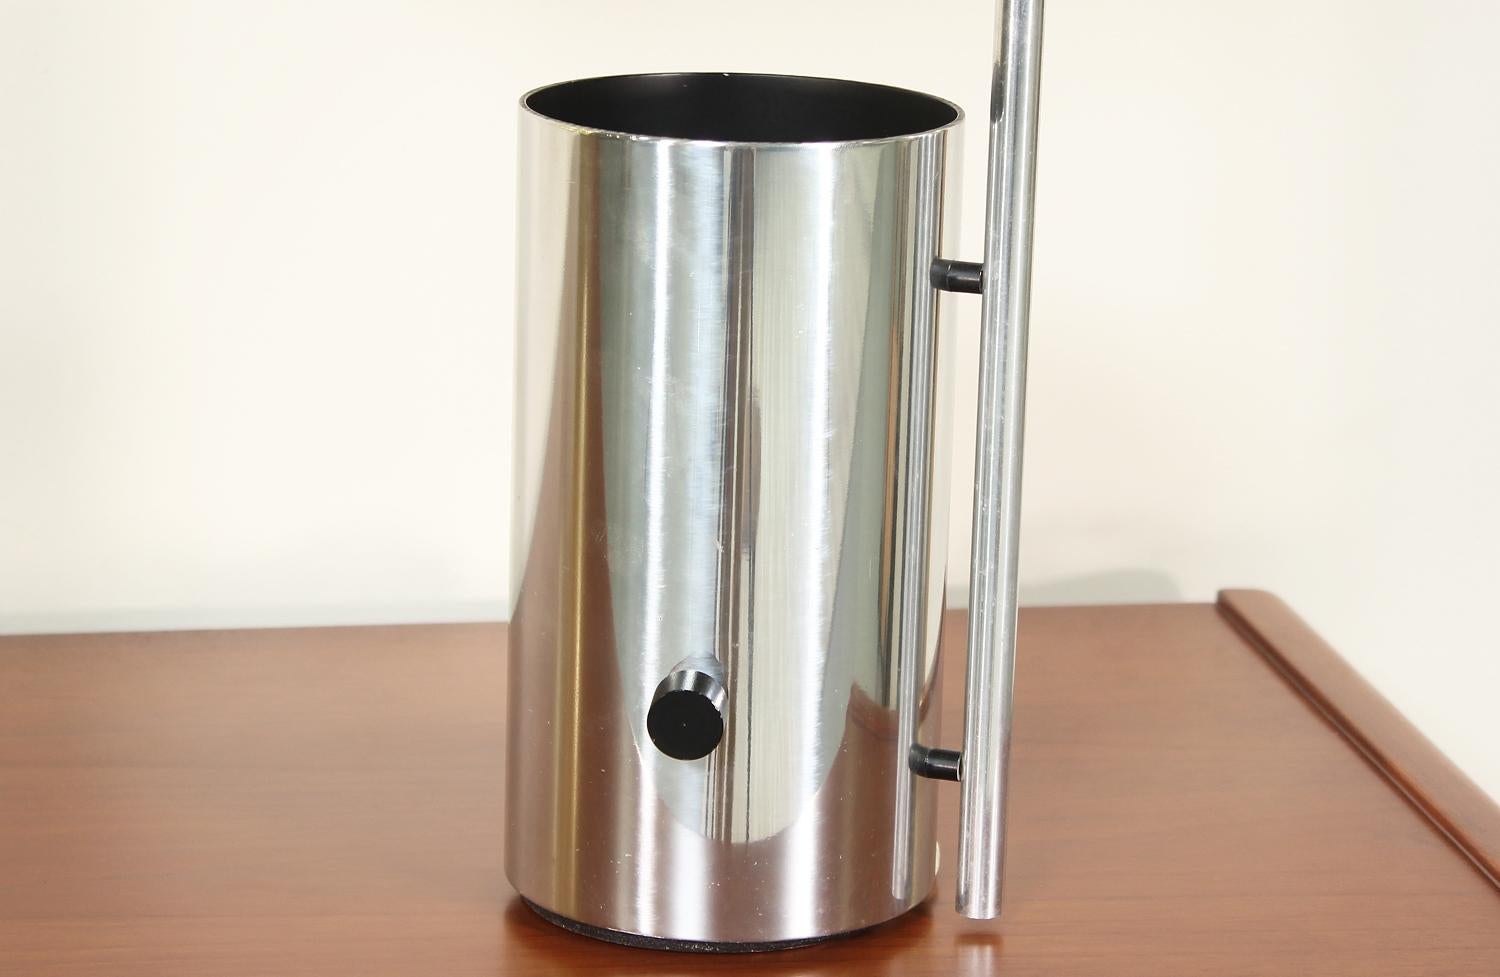 Steel George Nelson “Half-Nelson” Chrome Reflector Lamp for Koch & Lowy